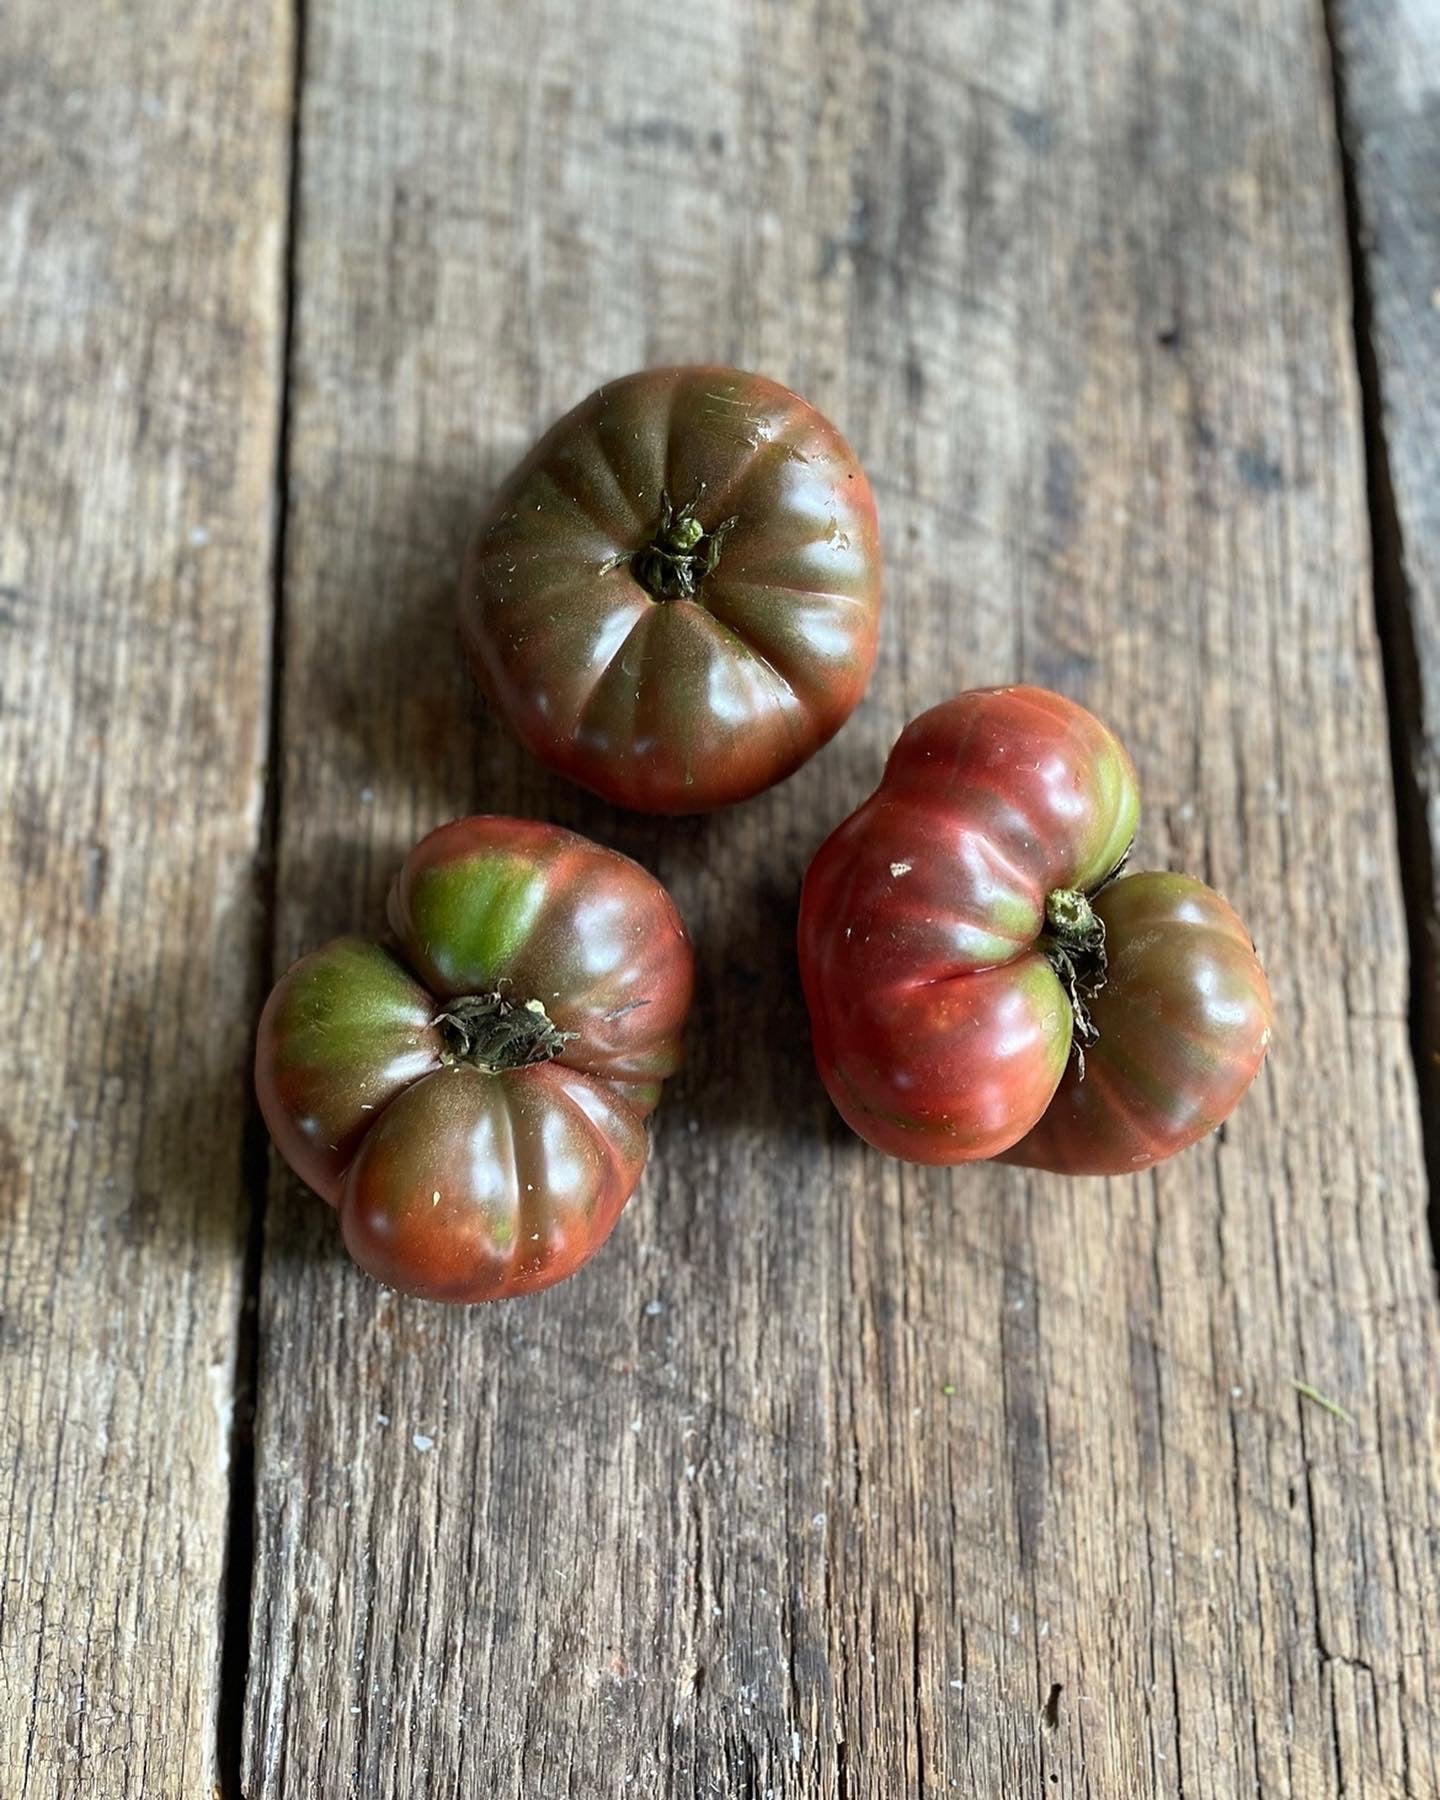 Tim’s Black Ruffles Heirloom Tomato Seeds